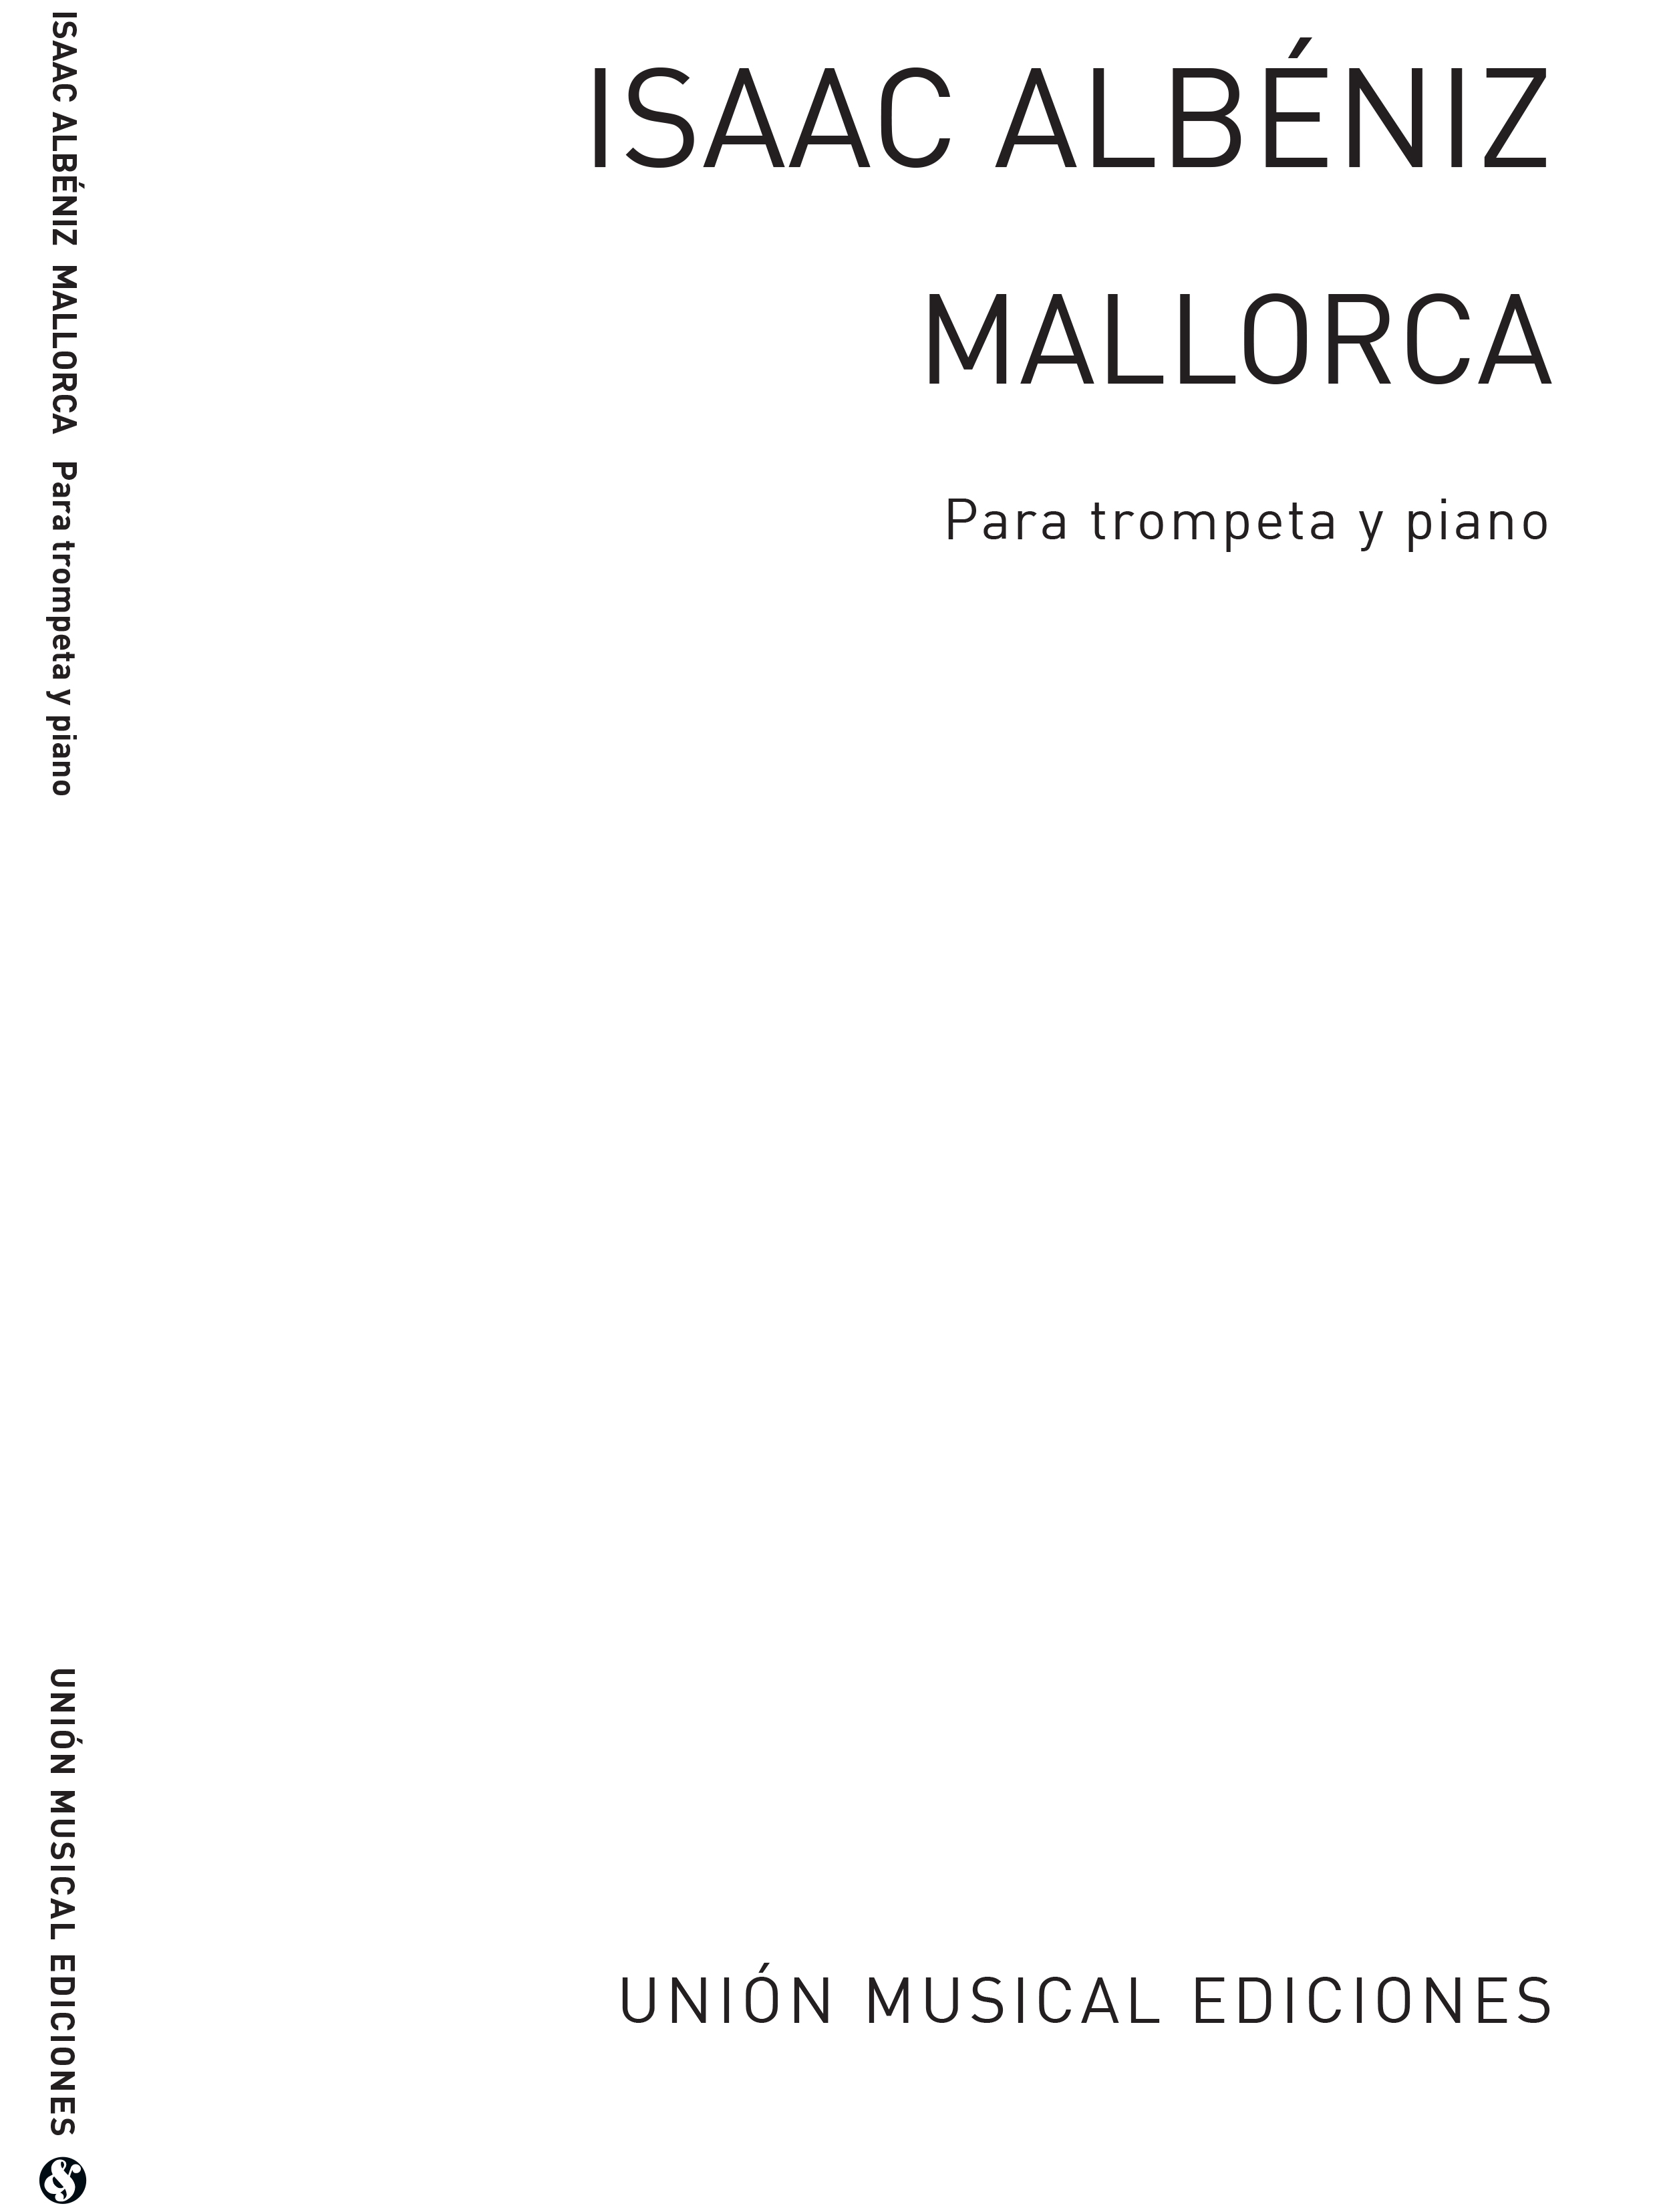 Albeniz: Mallorca Barcarola (Amaz) for Trumpet and Piano